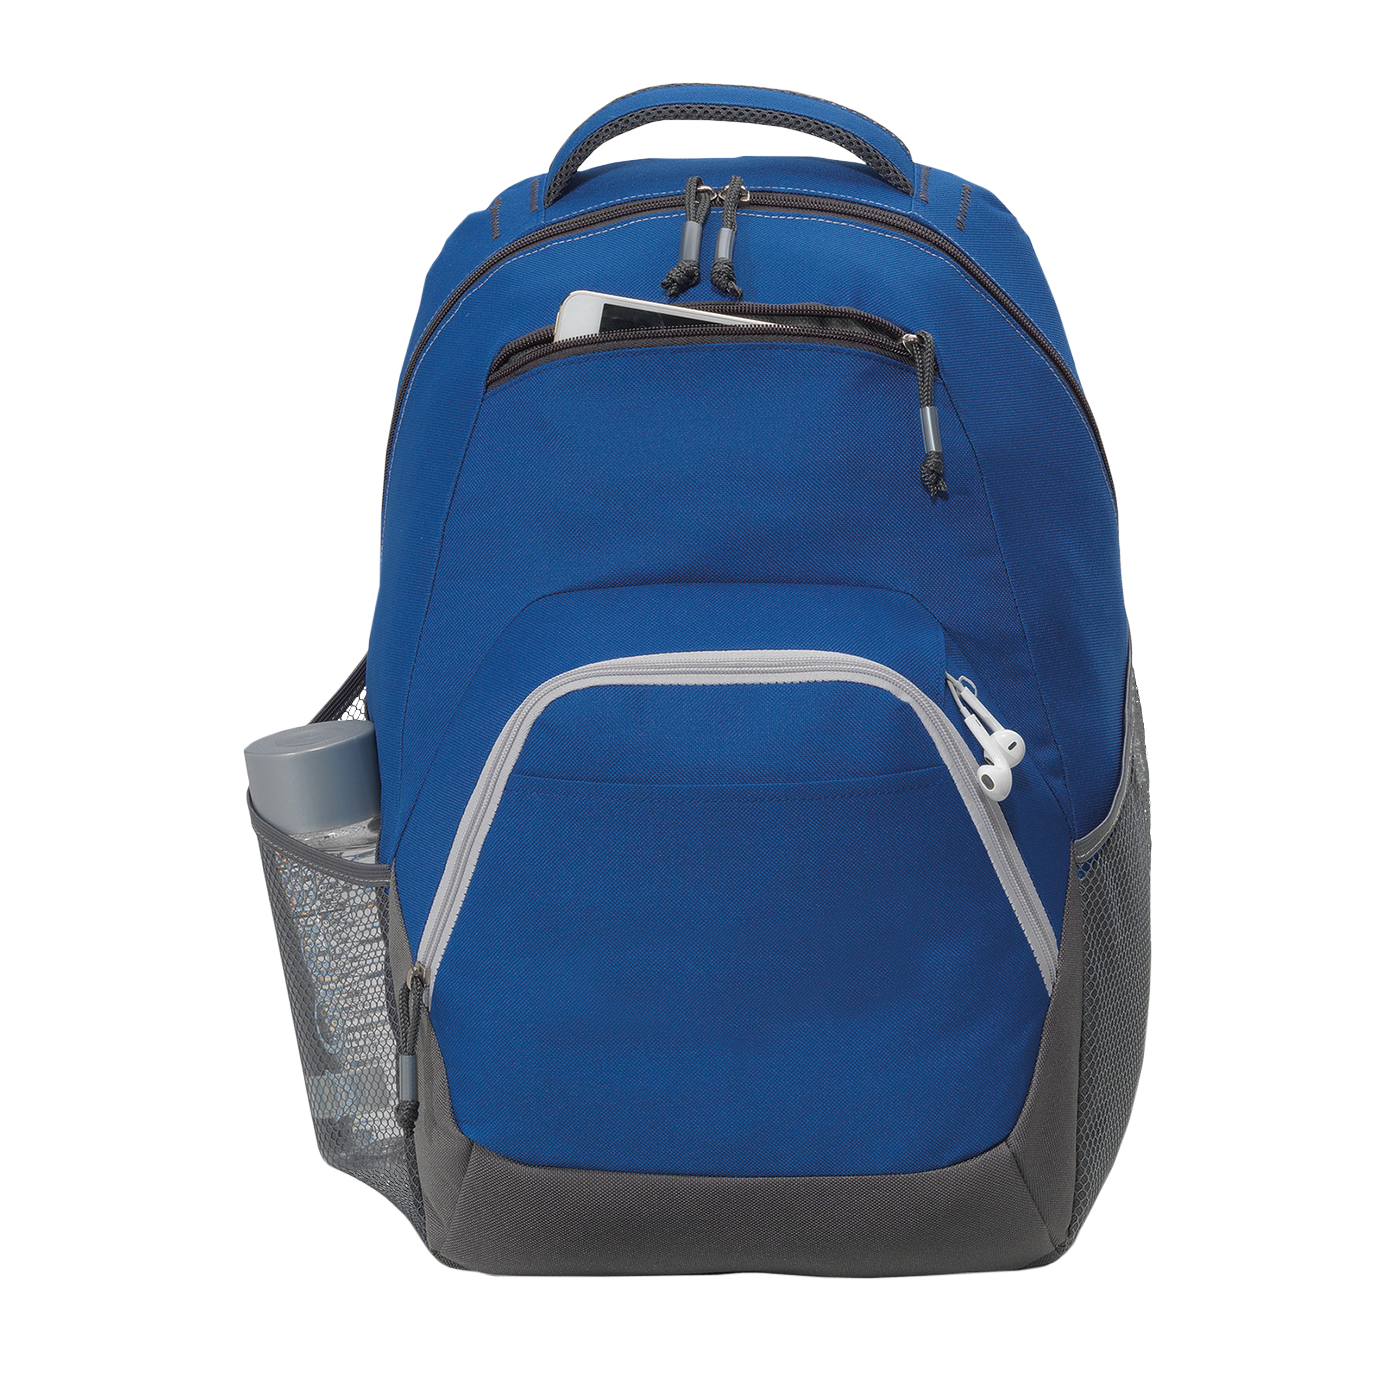 Rangeley Computer Backpack - Royal